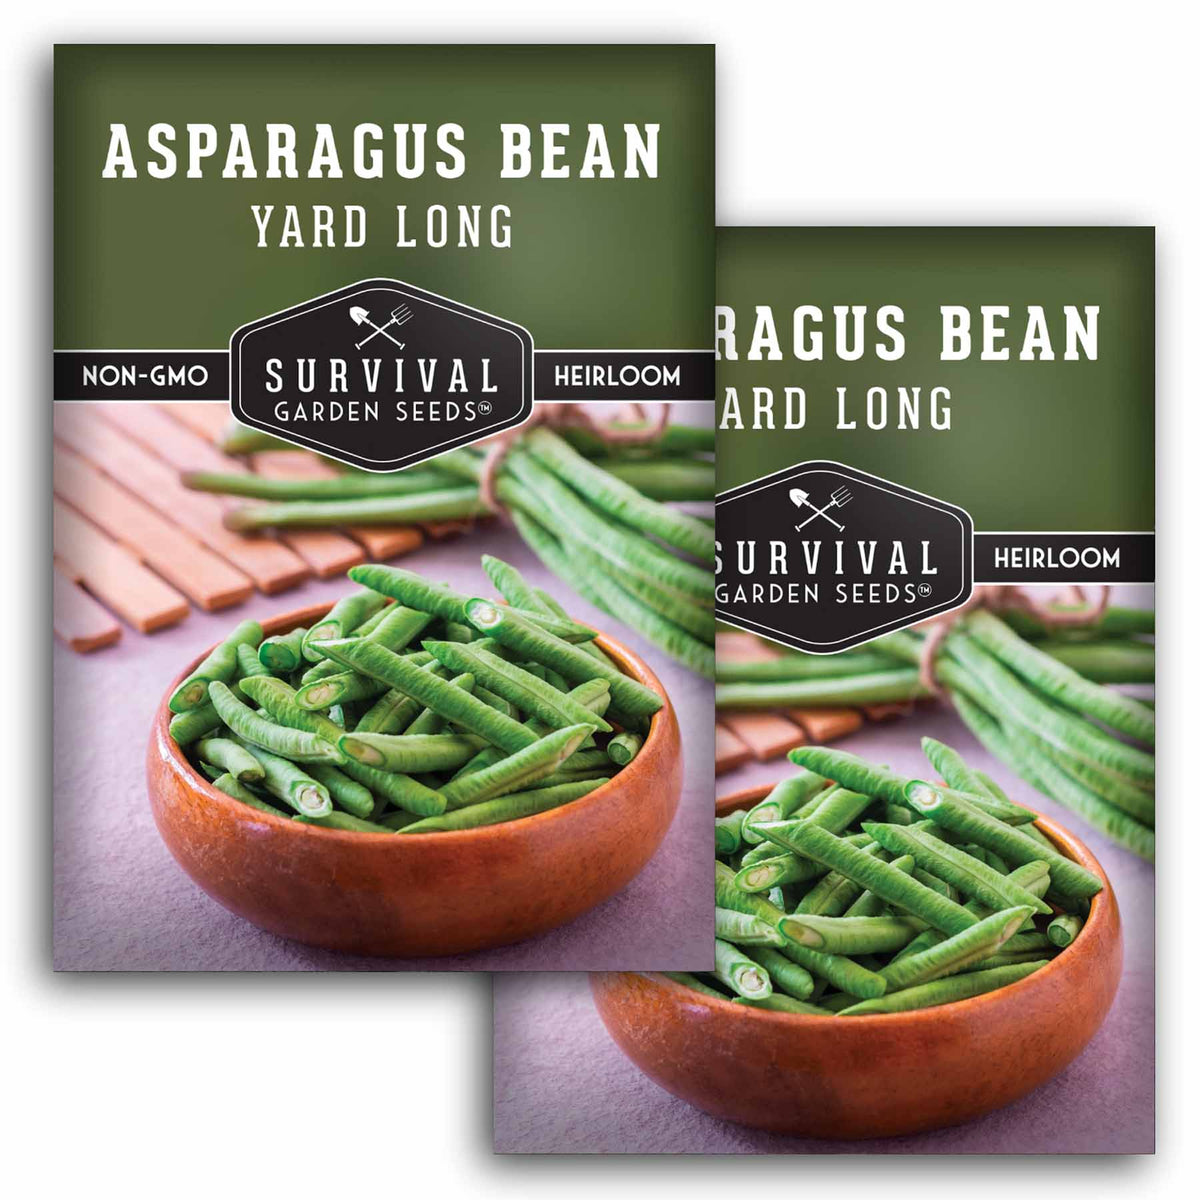 2 packets of Asparagus Bean seeds